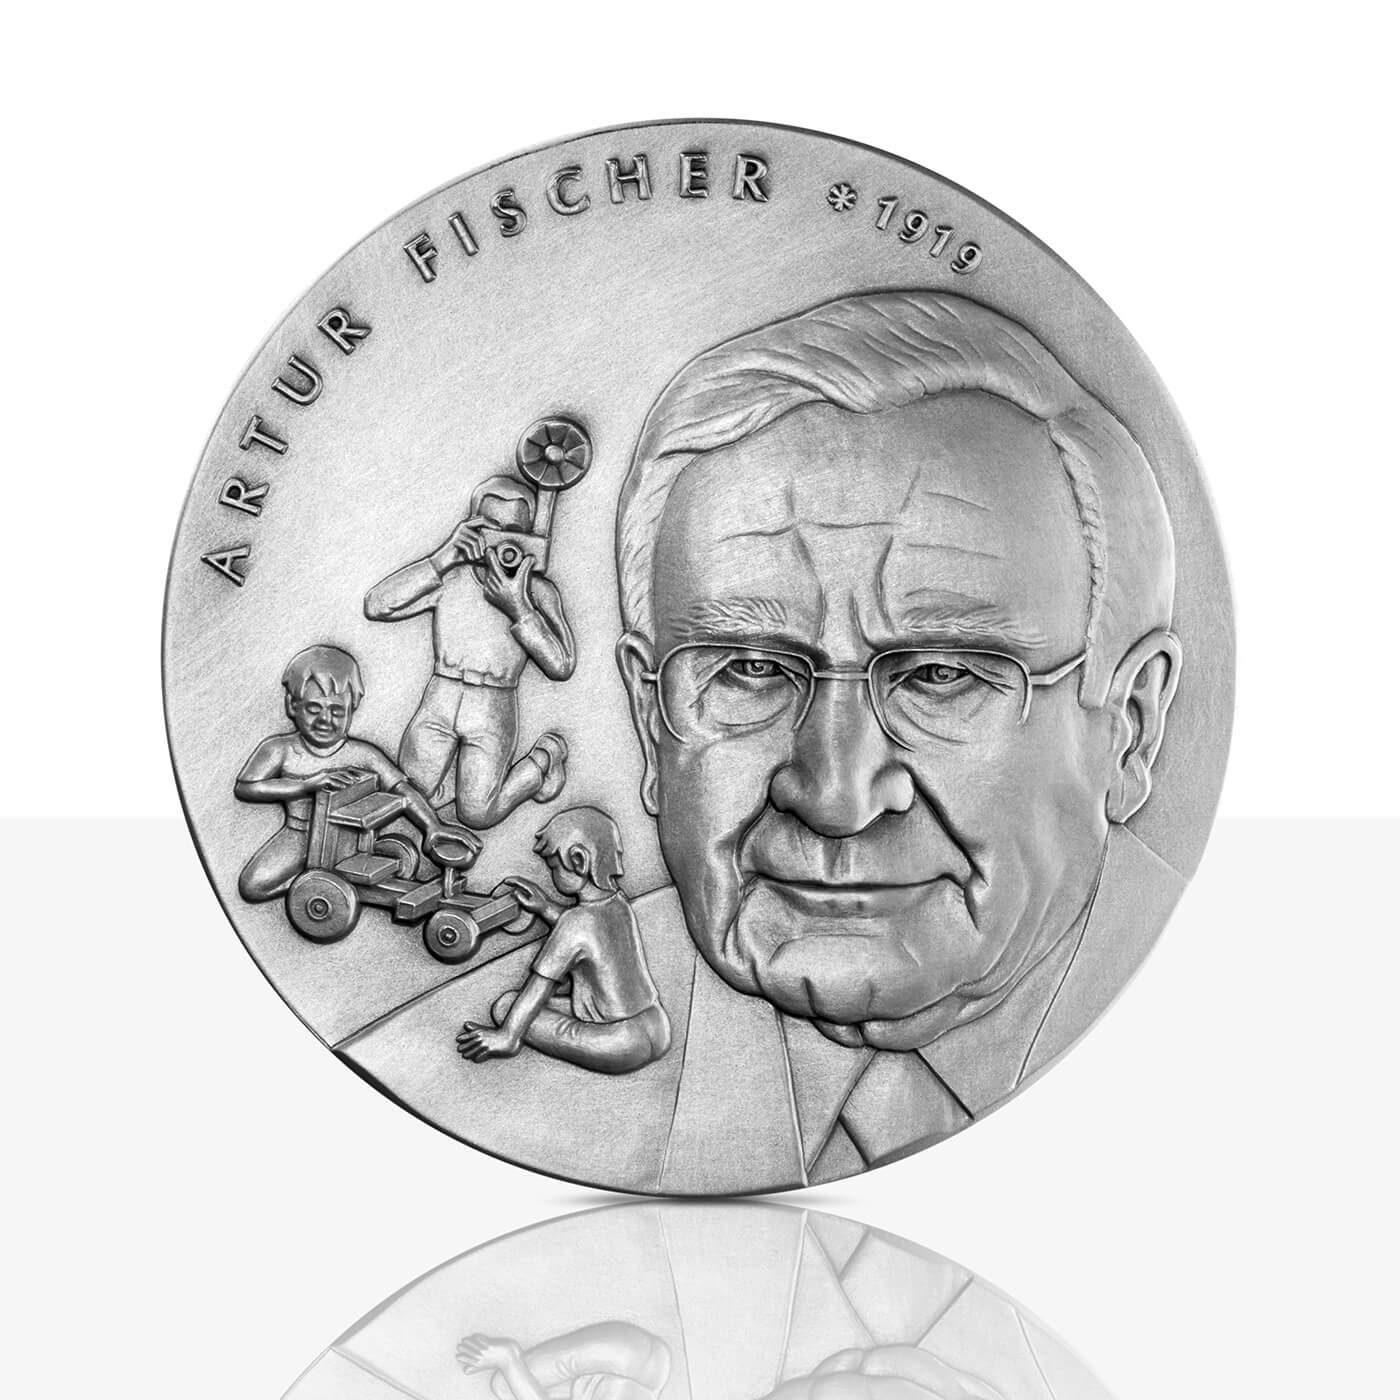 art medal Fischer silver front side